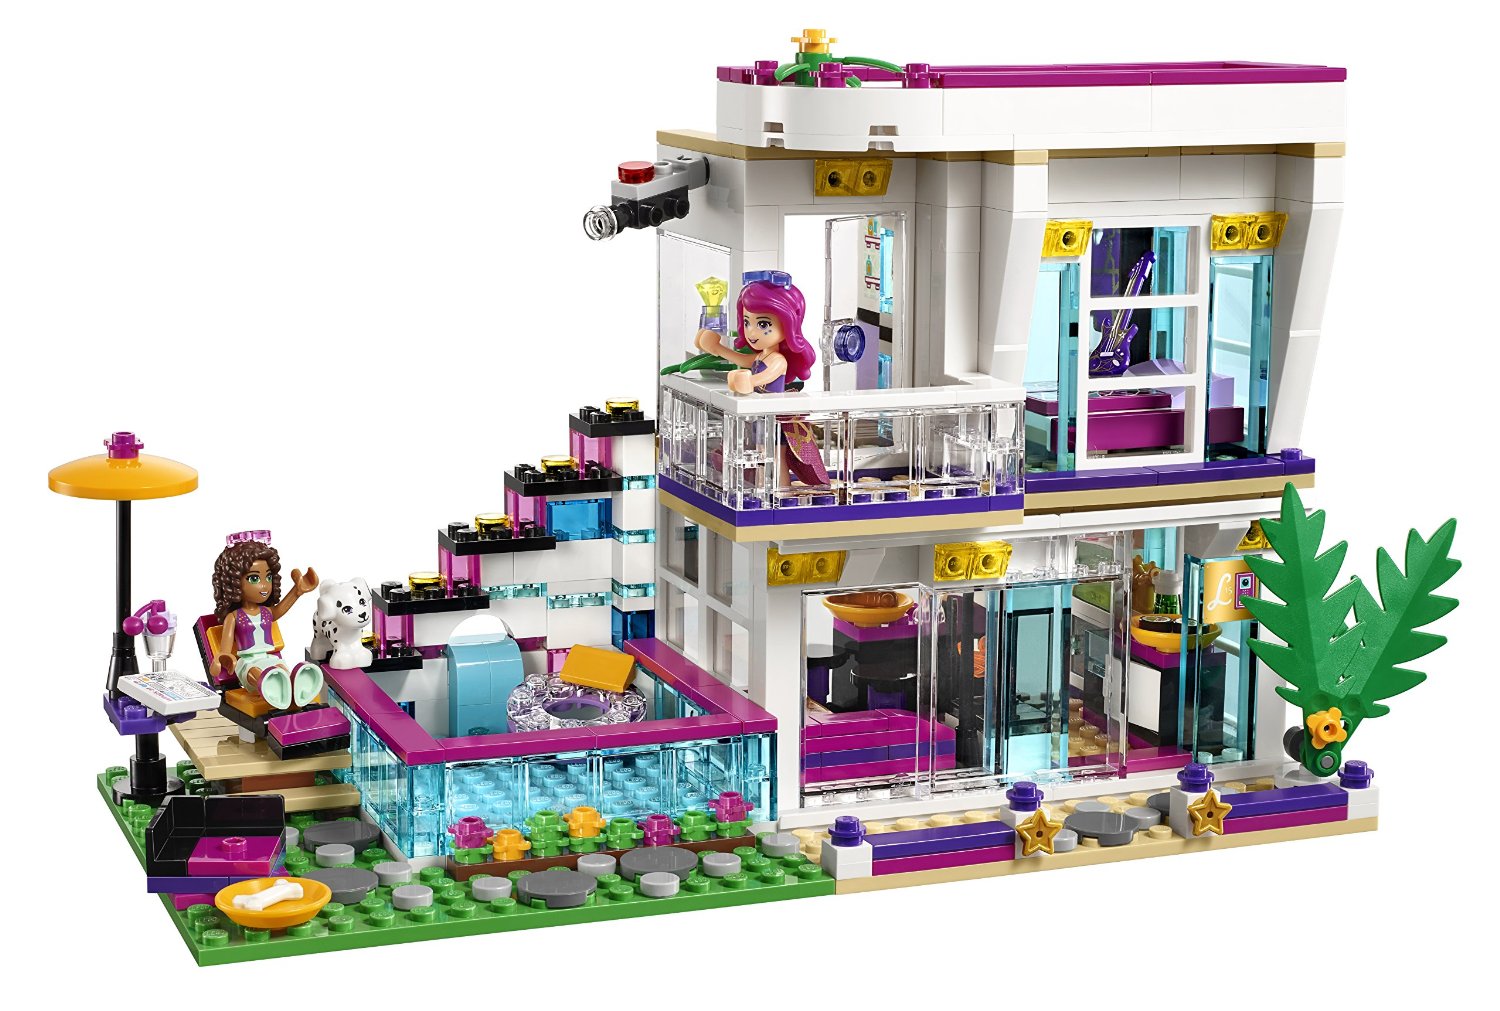 Shopping For LEGO Friends Livi's Pop Star House 41135 ...